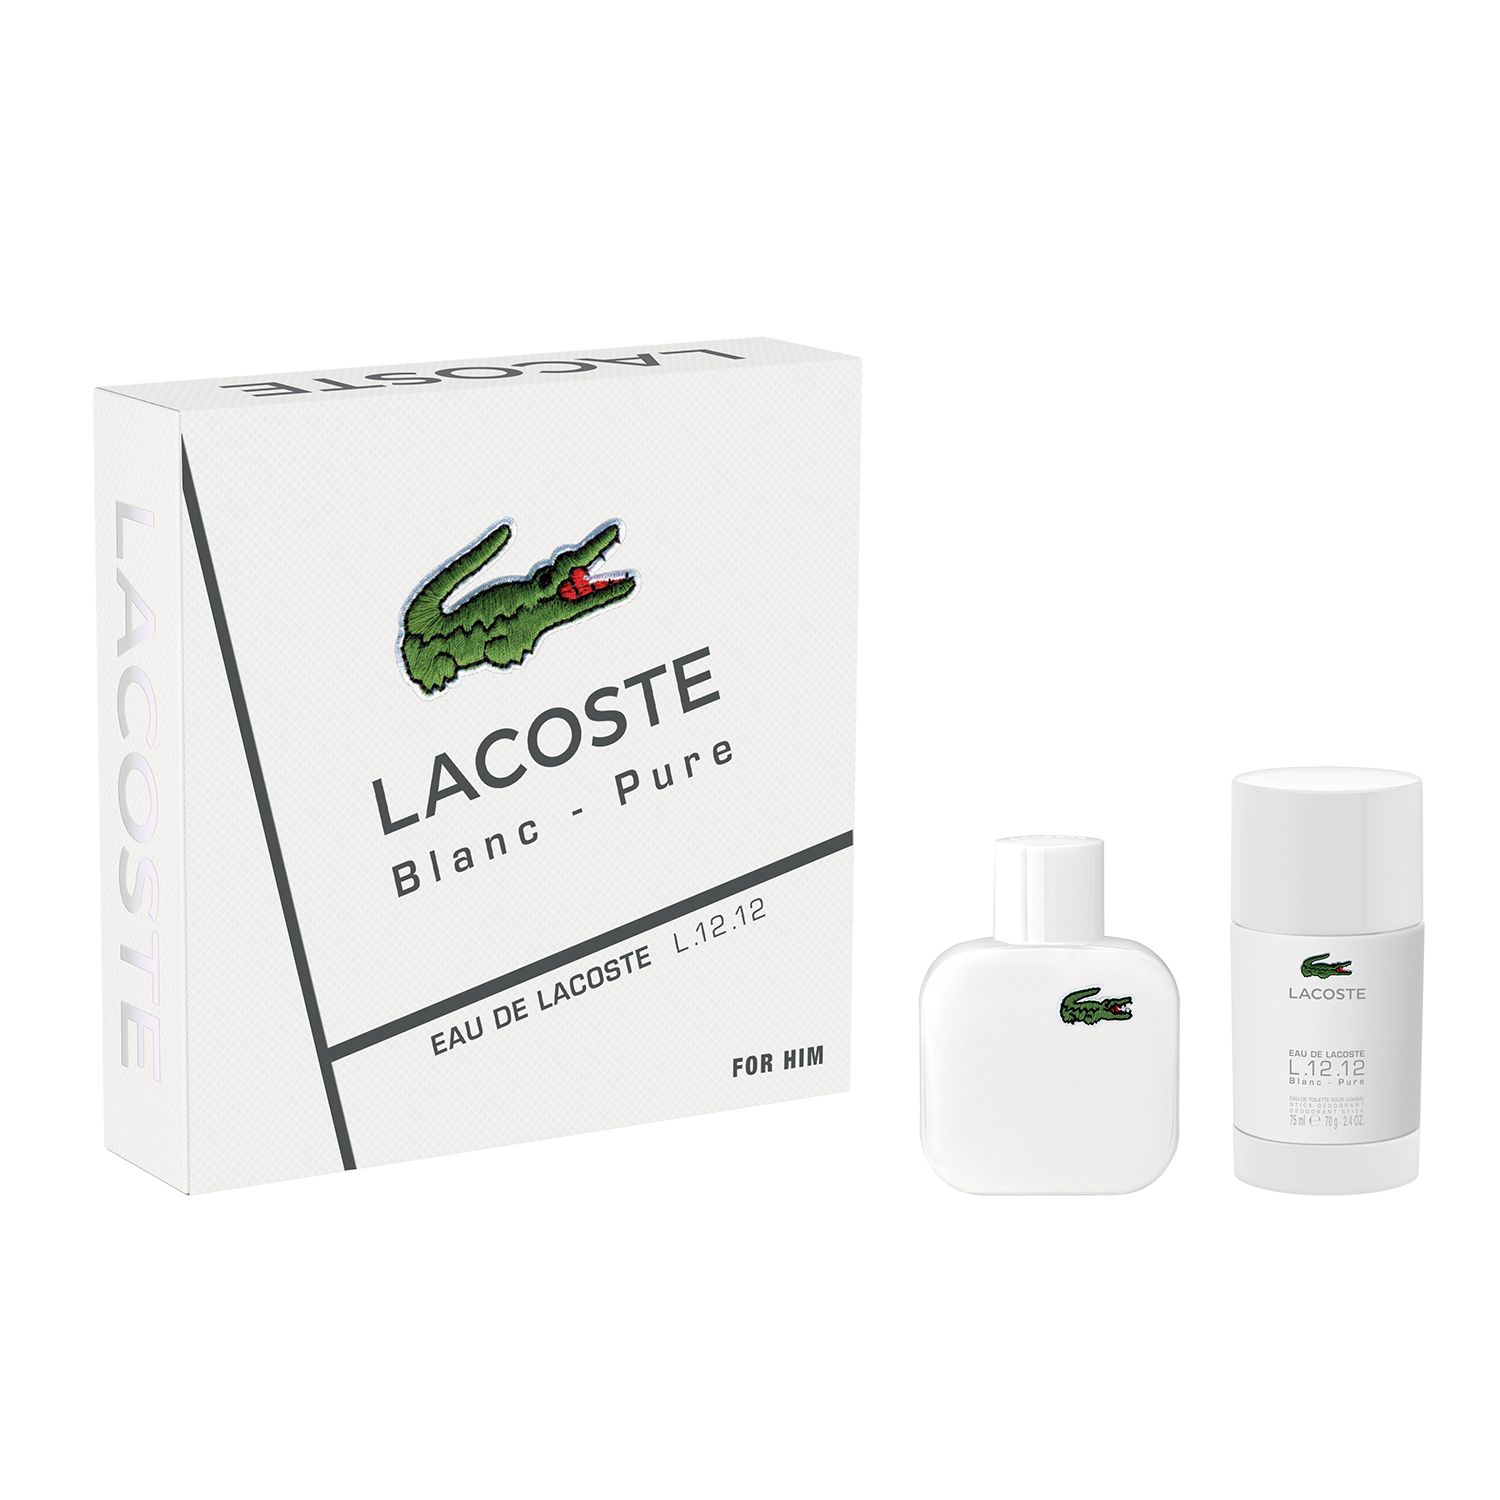 lacoste men's cologne gift sets